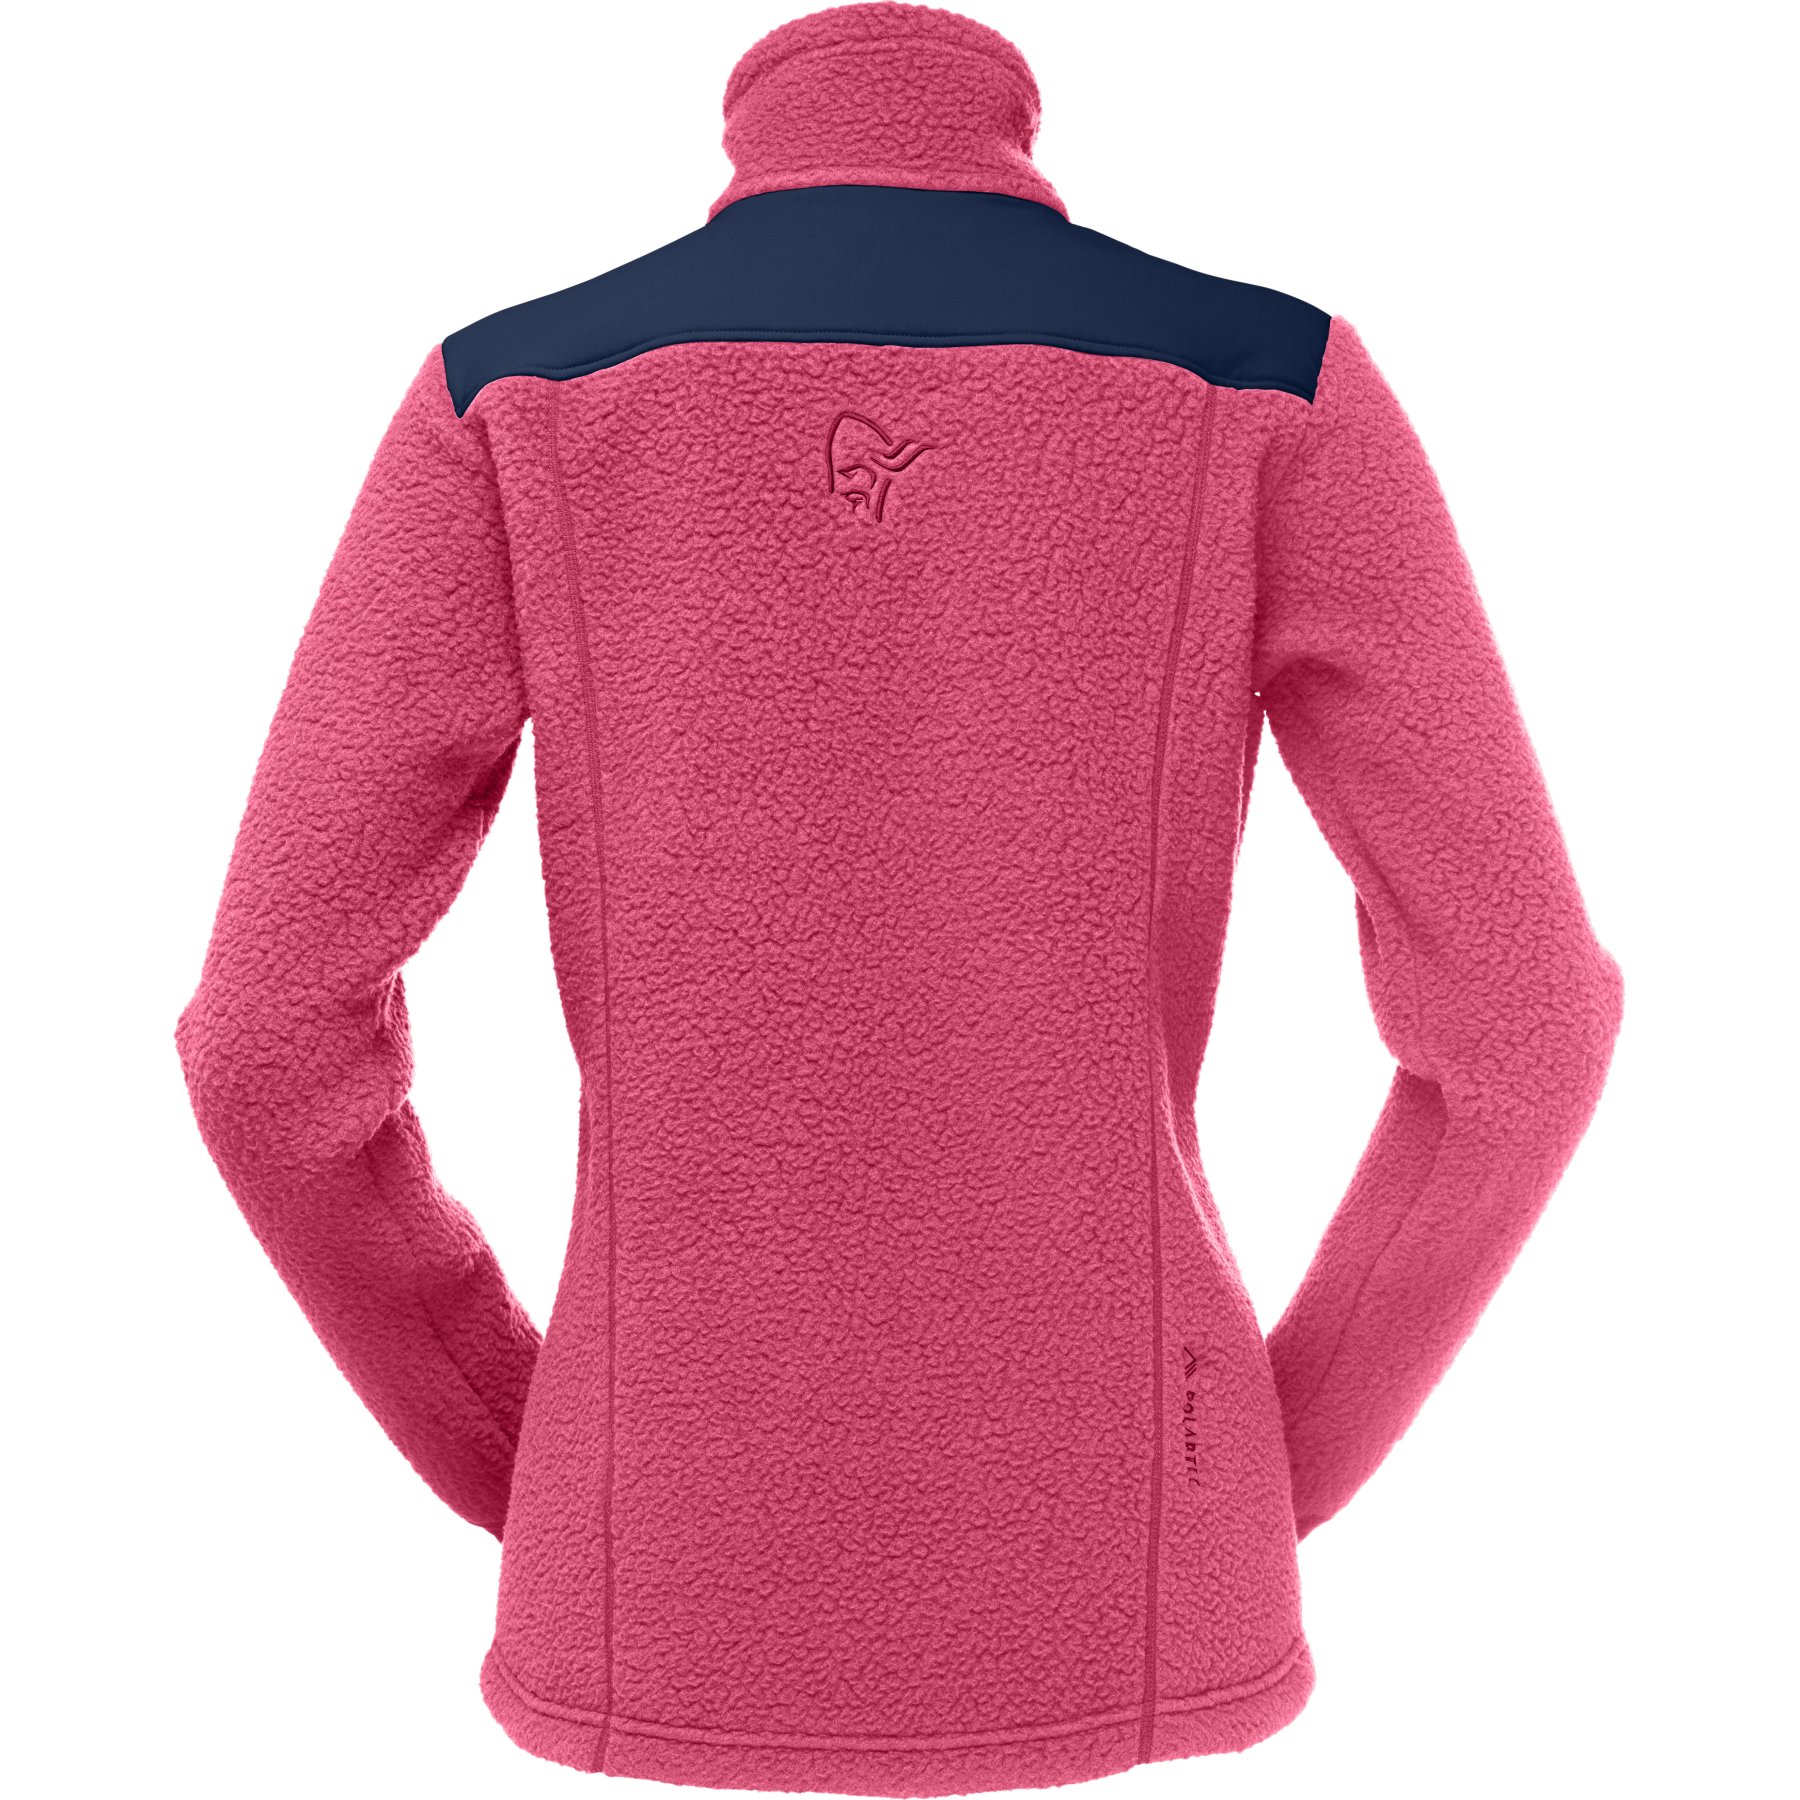 Norrona Women's Trollveggen Thermal Pro Jacket - Small - Tourmaline